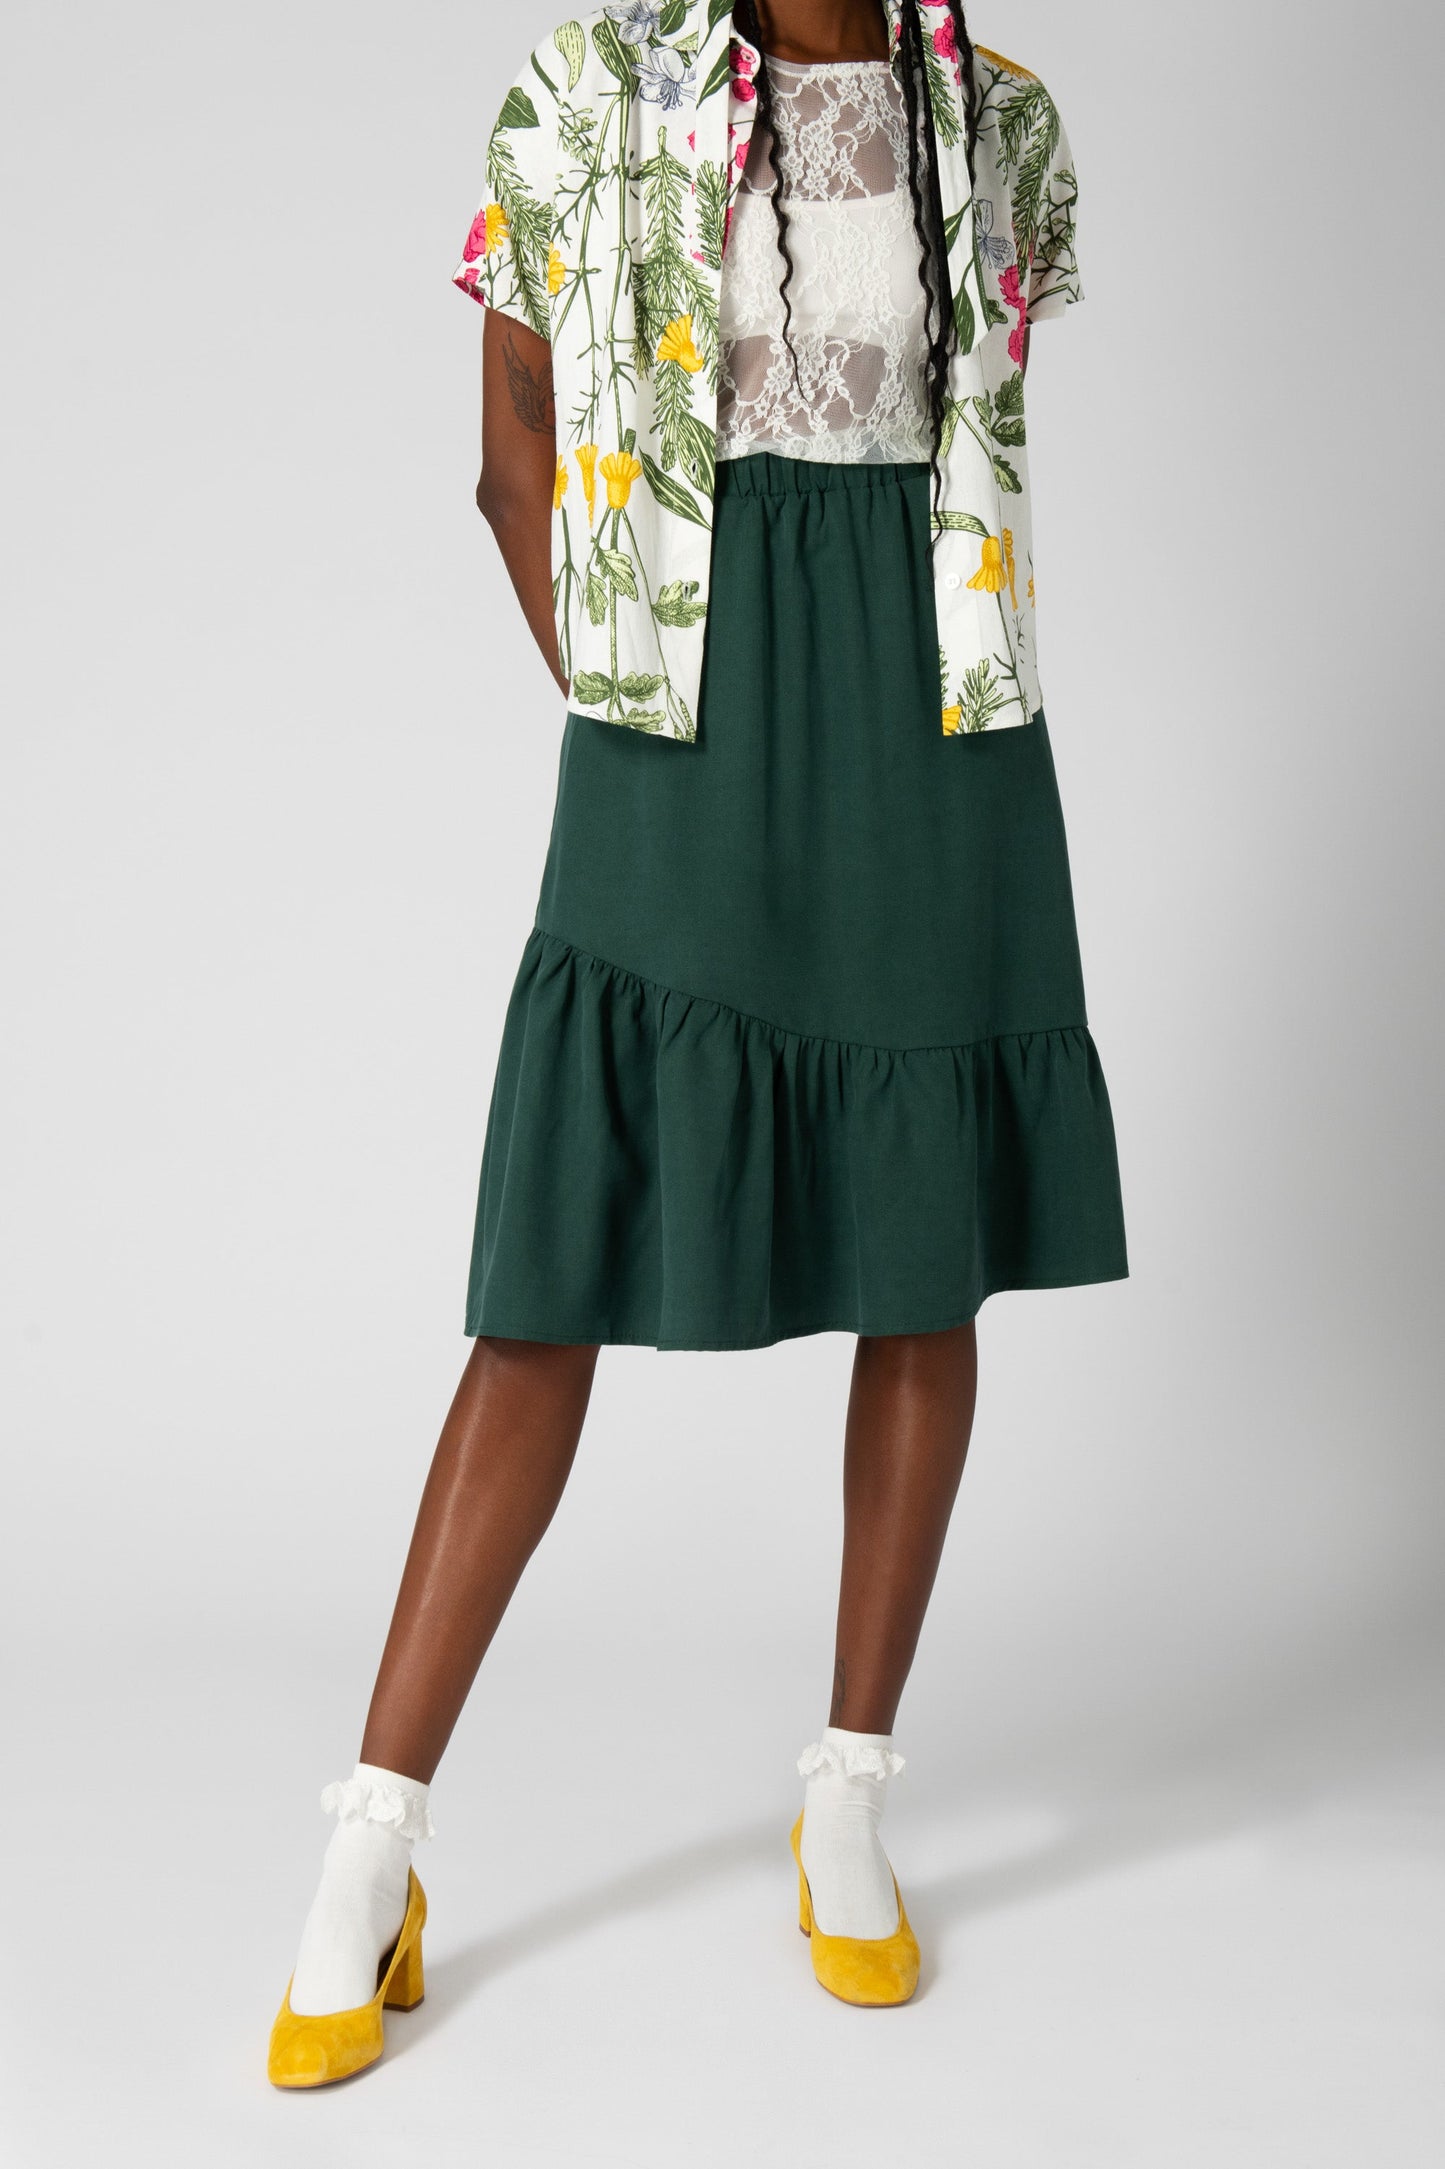 Ruffled green skirt Aporià